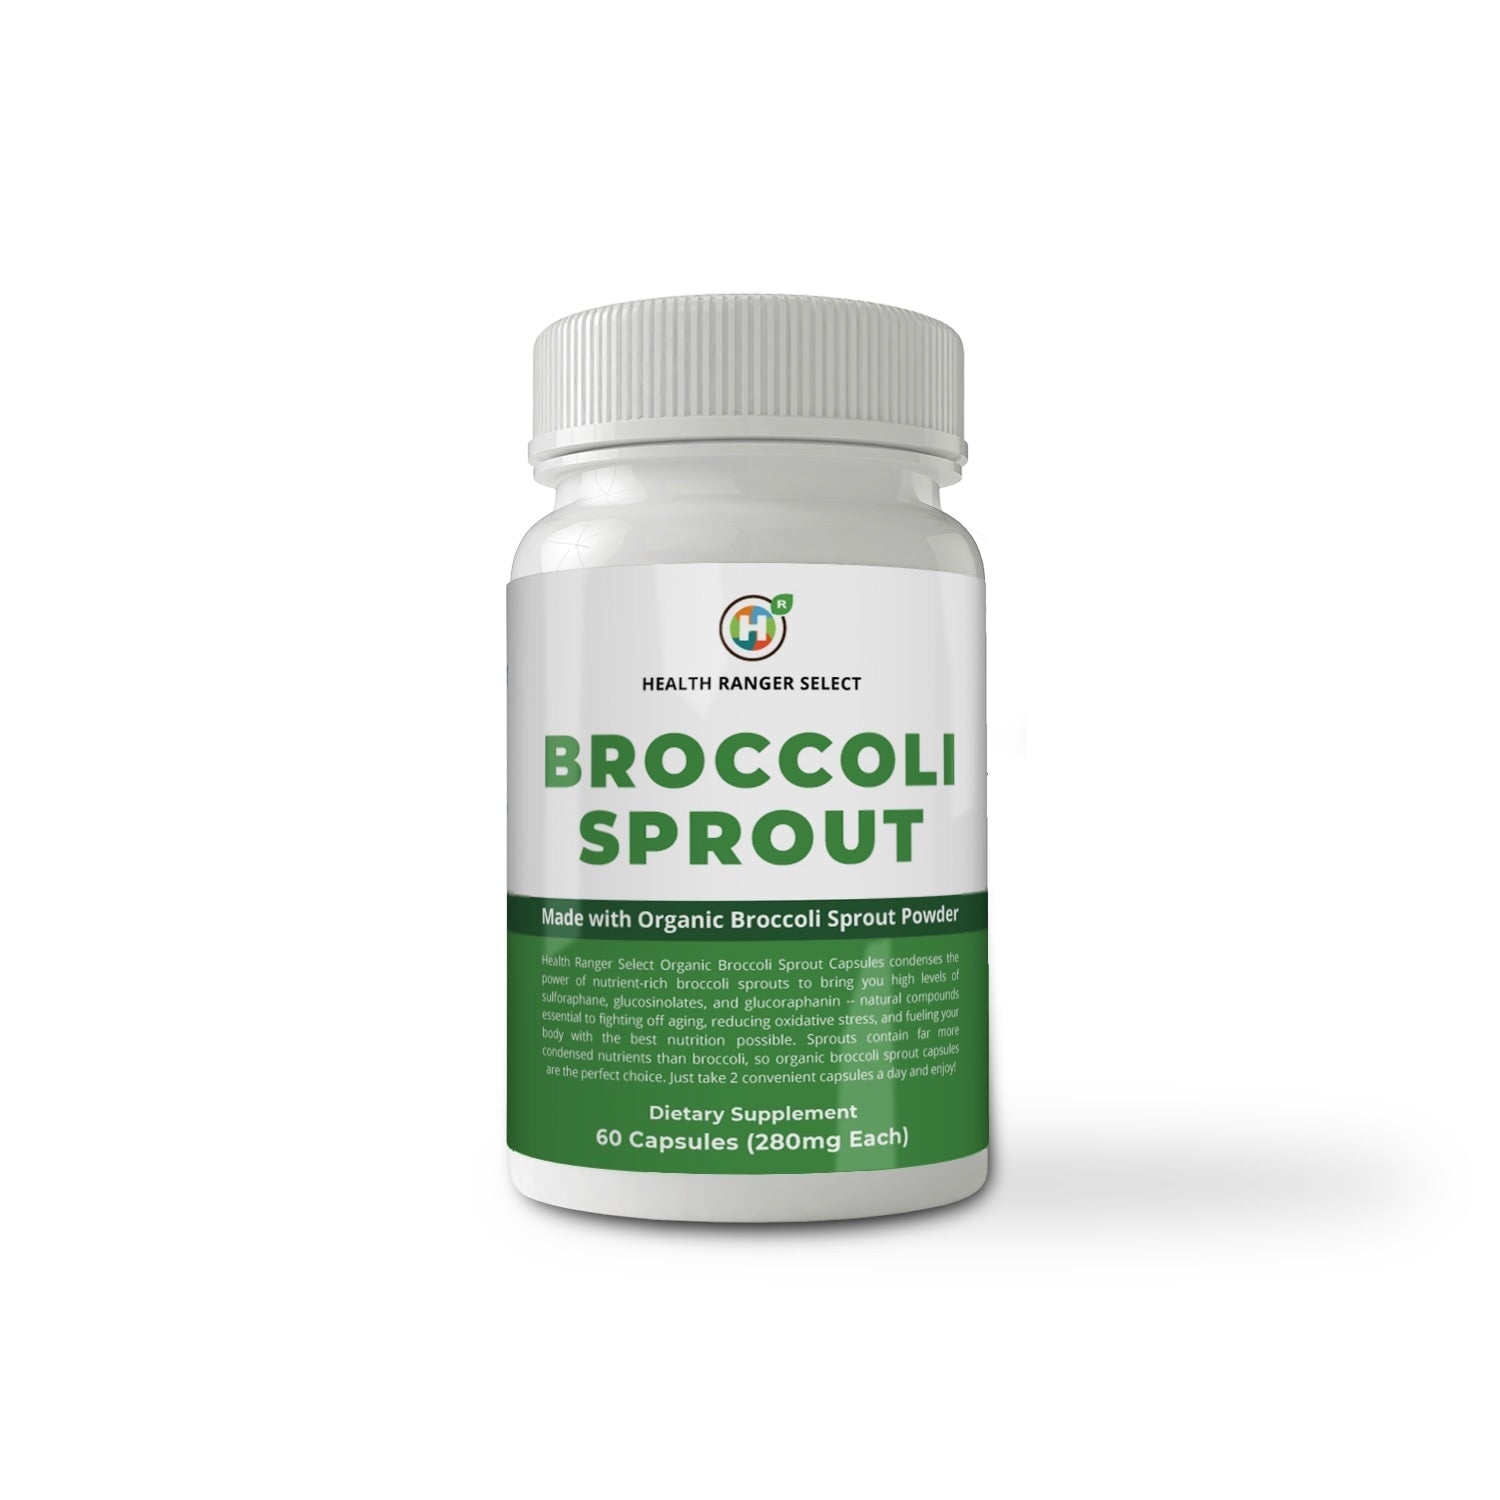 Broccoli Sprouts - 60 capsules - with Organic Broccoli Sprout Powder New Arrivals Brighteon Store 